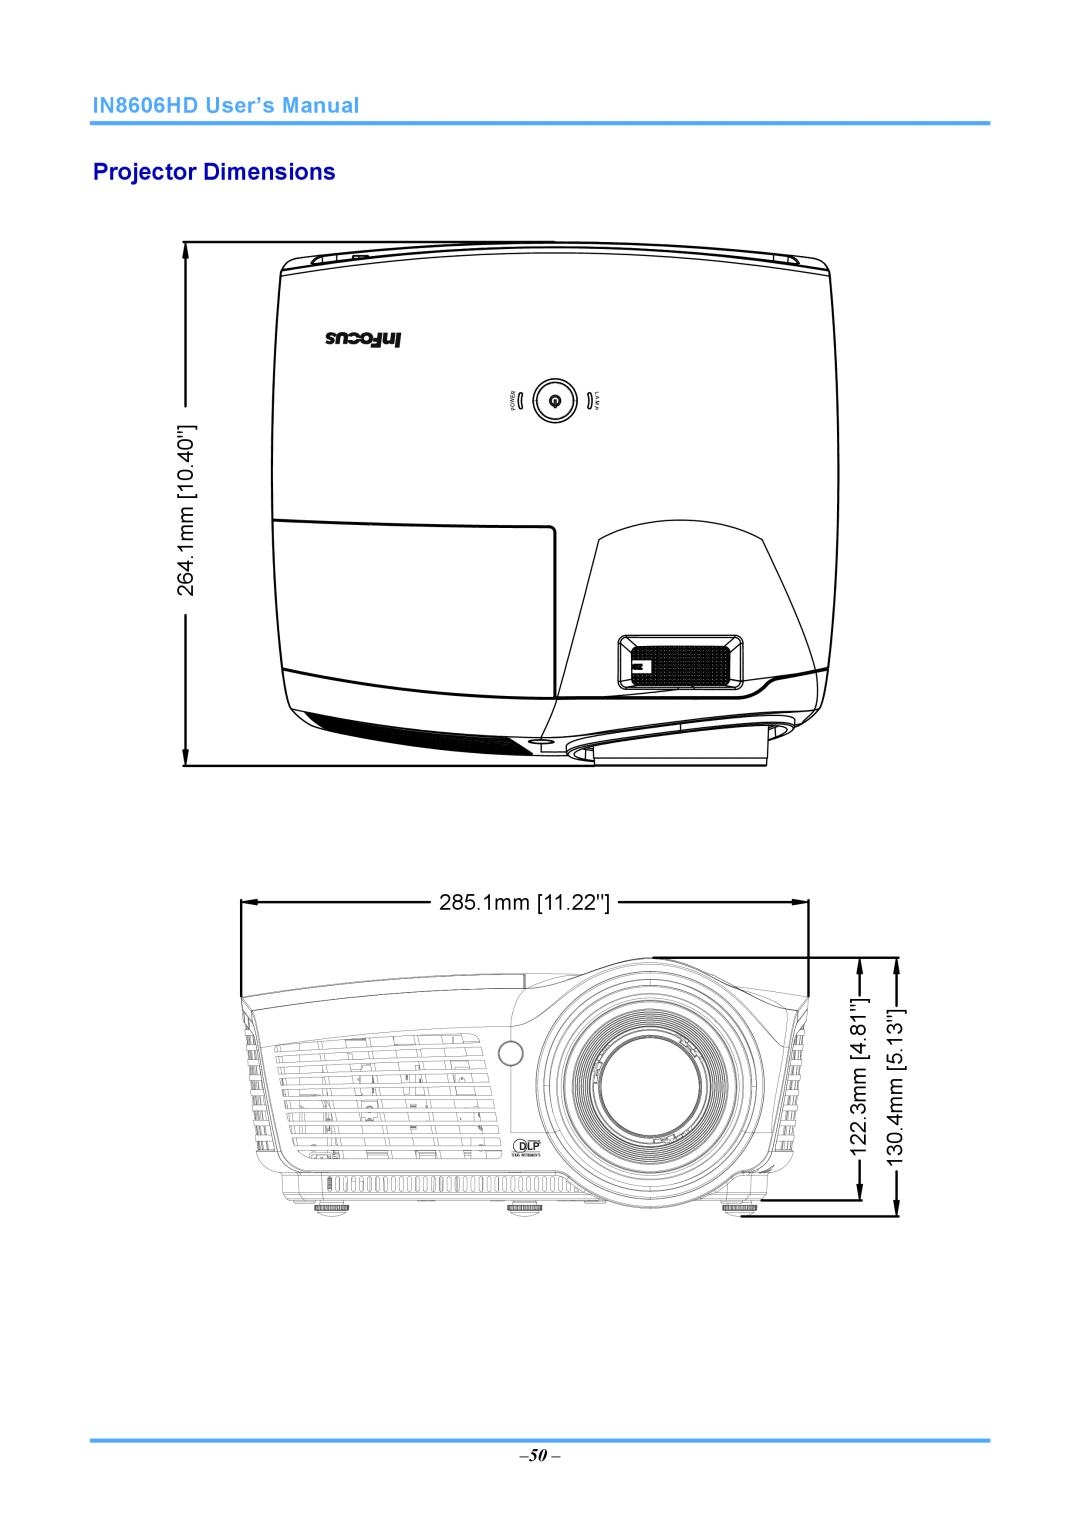 InFocus IN8606HD manual Projector Dimensions, 264.1mm, 285.1mm, 122.3mm, 130.4mm 